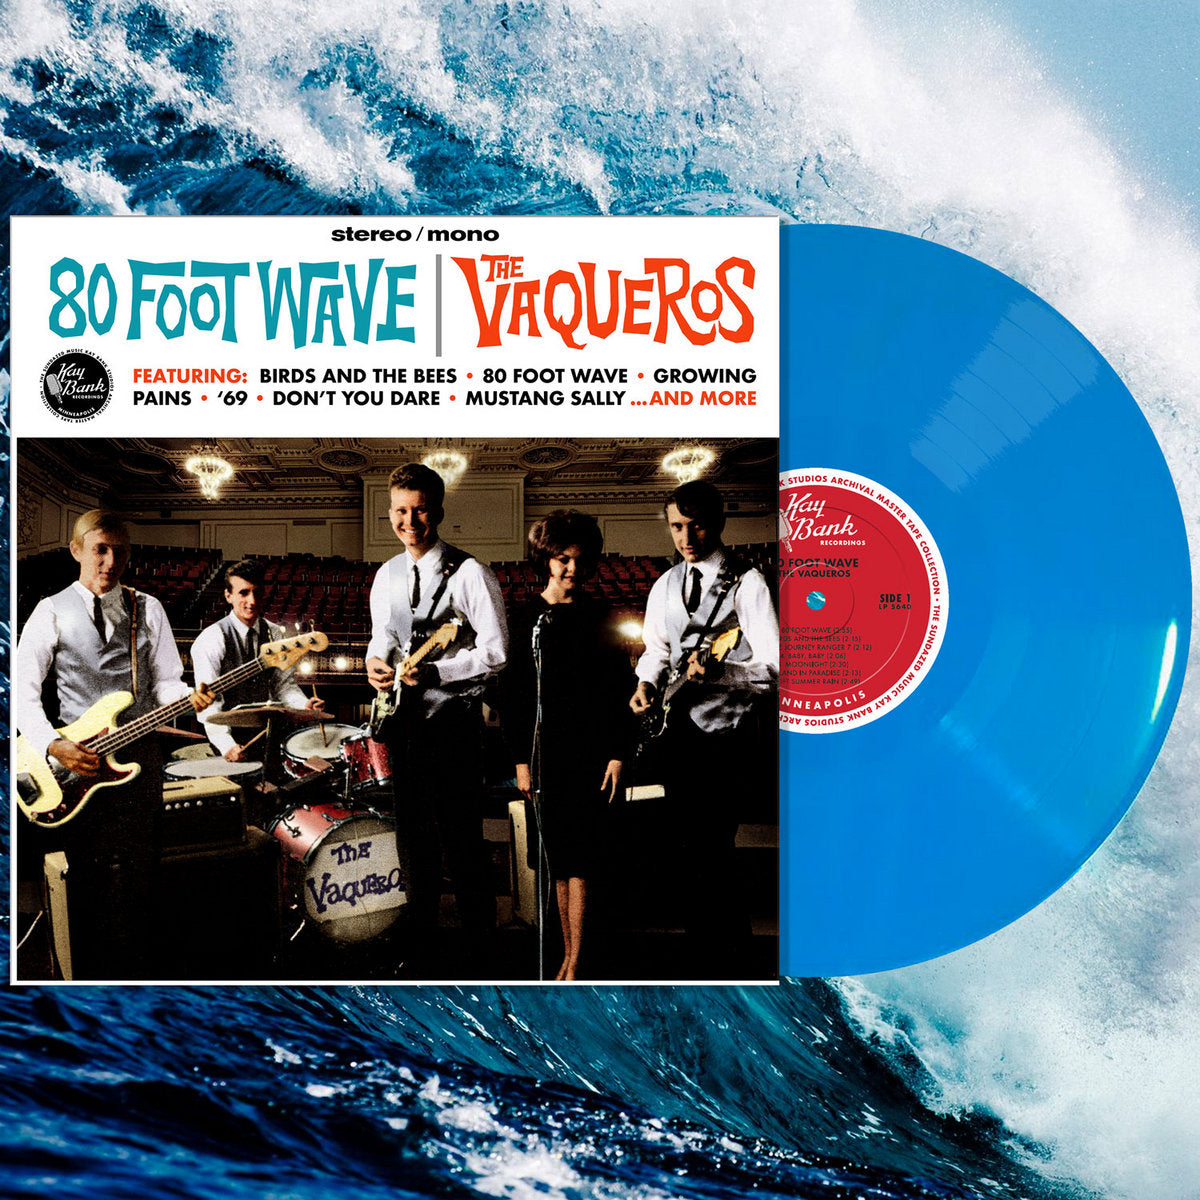 THE VAQUEROS - 80 Foot Wave - LP - Turquoise Vinyl [SEP 8]